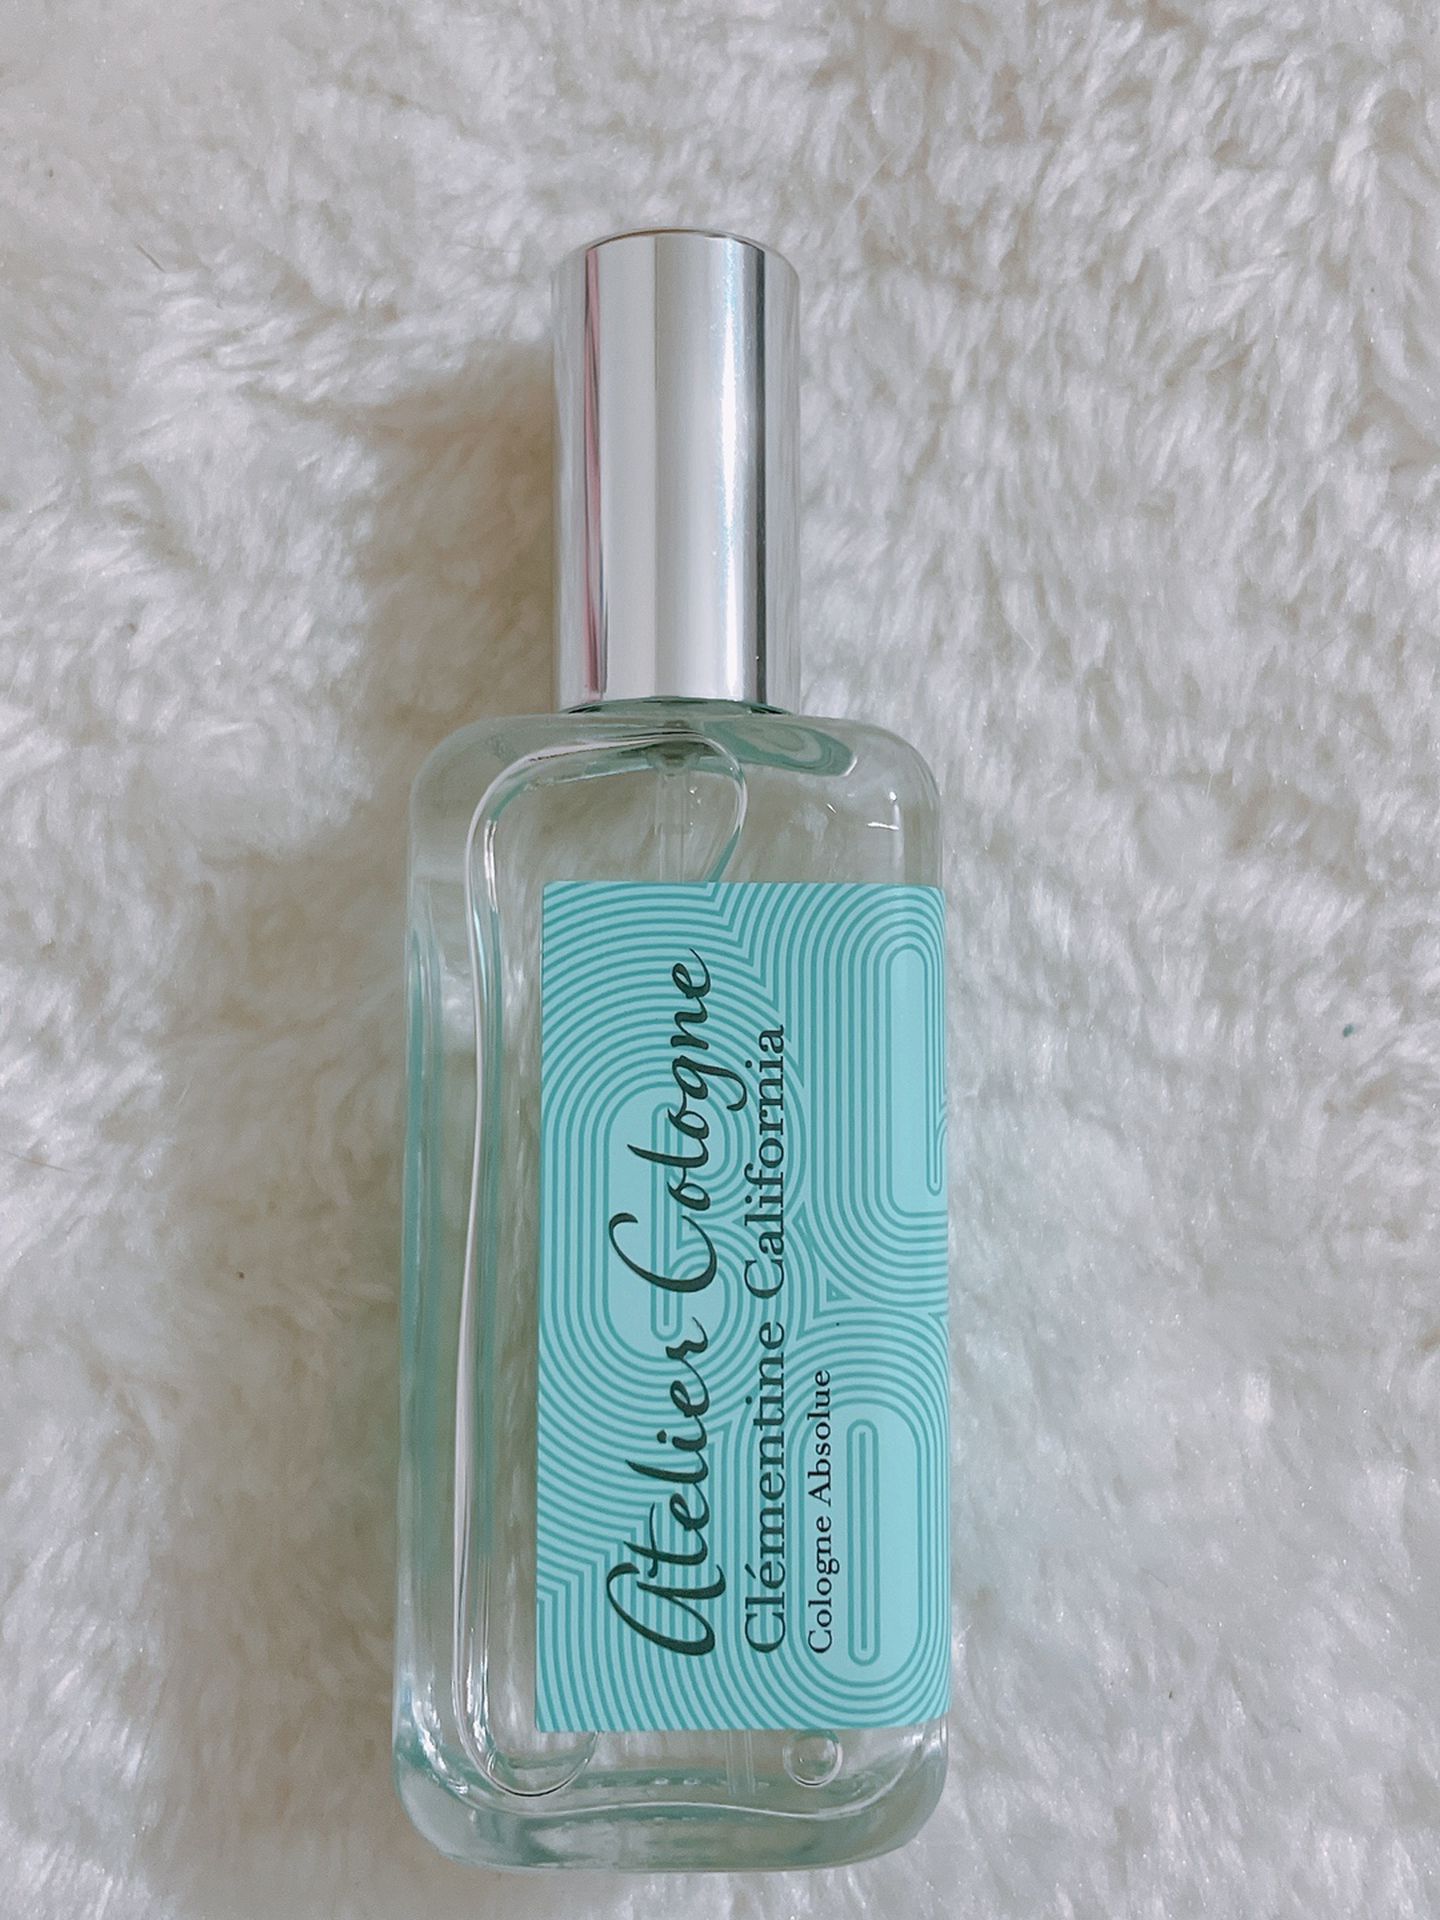 Atelier Cologne Perfume (Unopened Box)